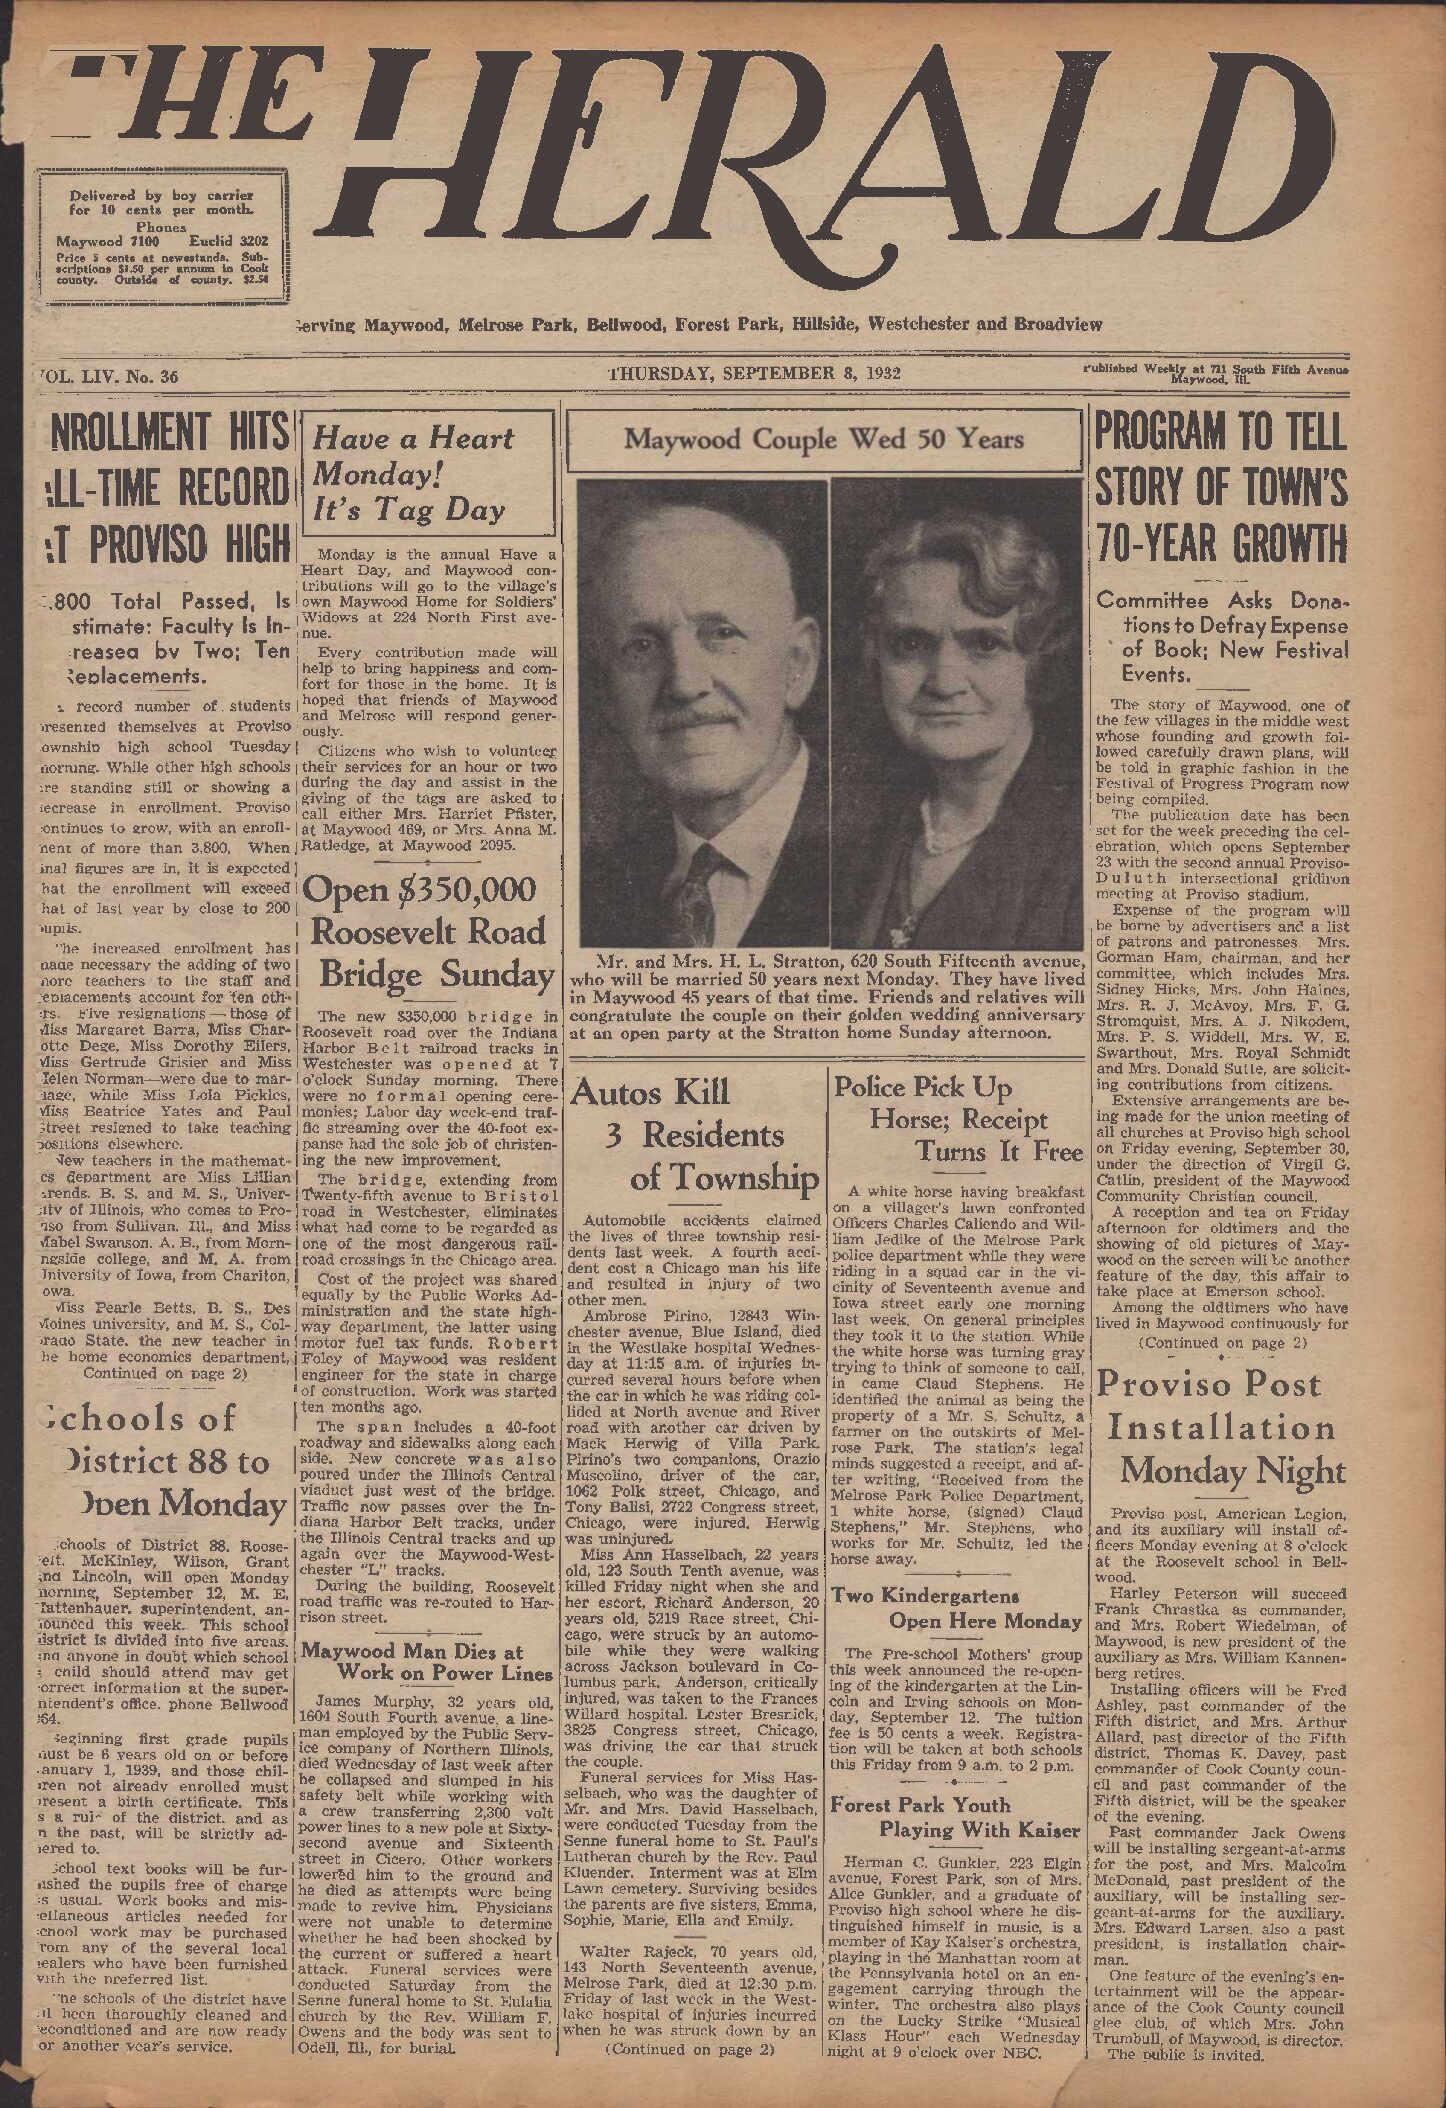 The Herald – 19380908